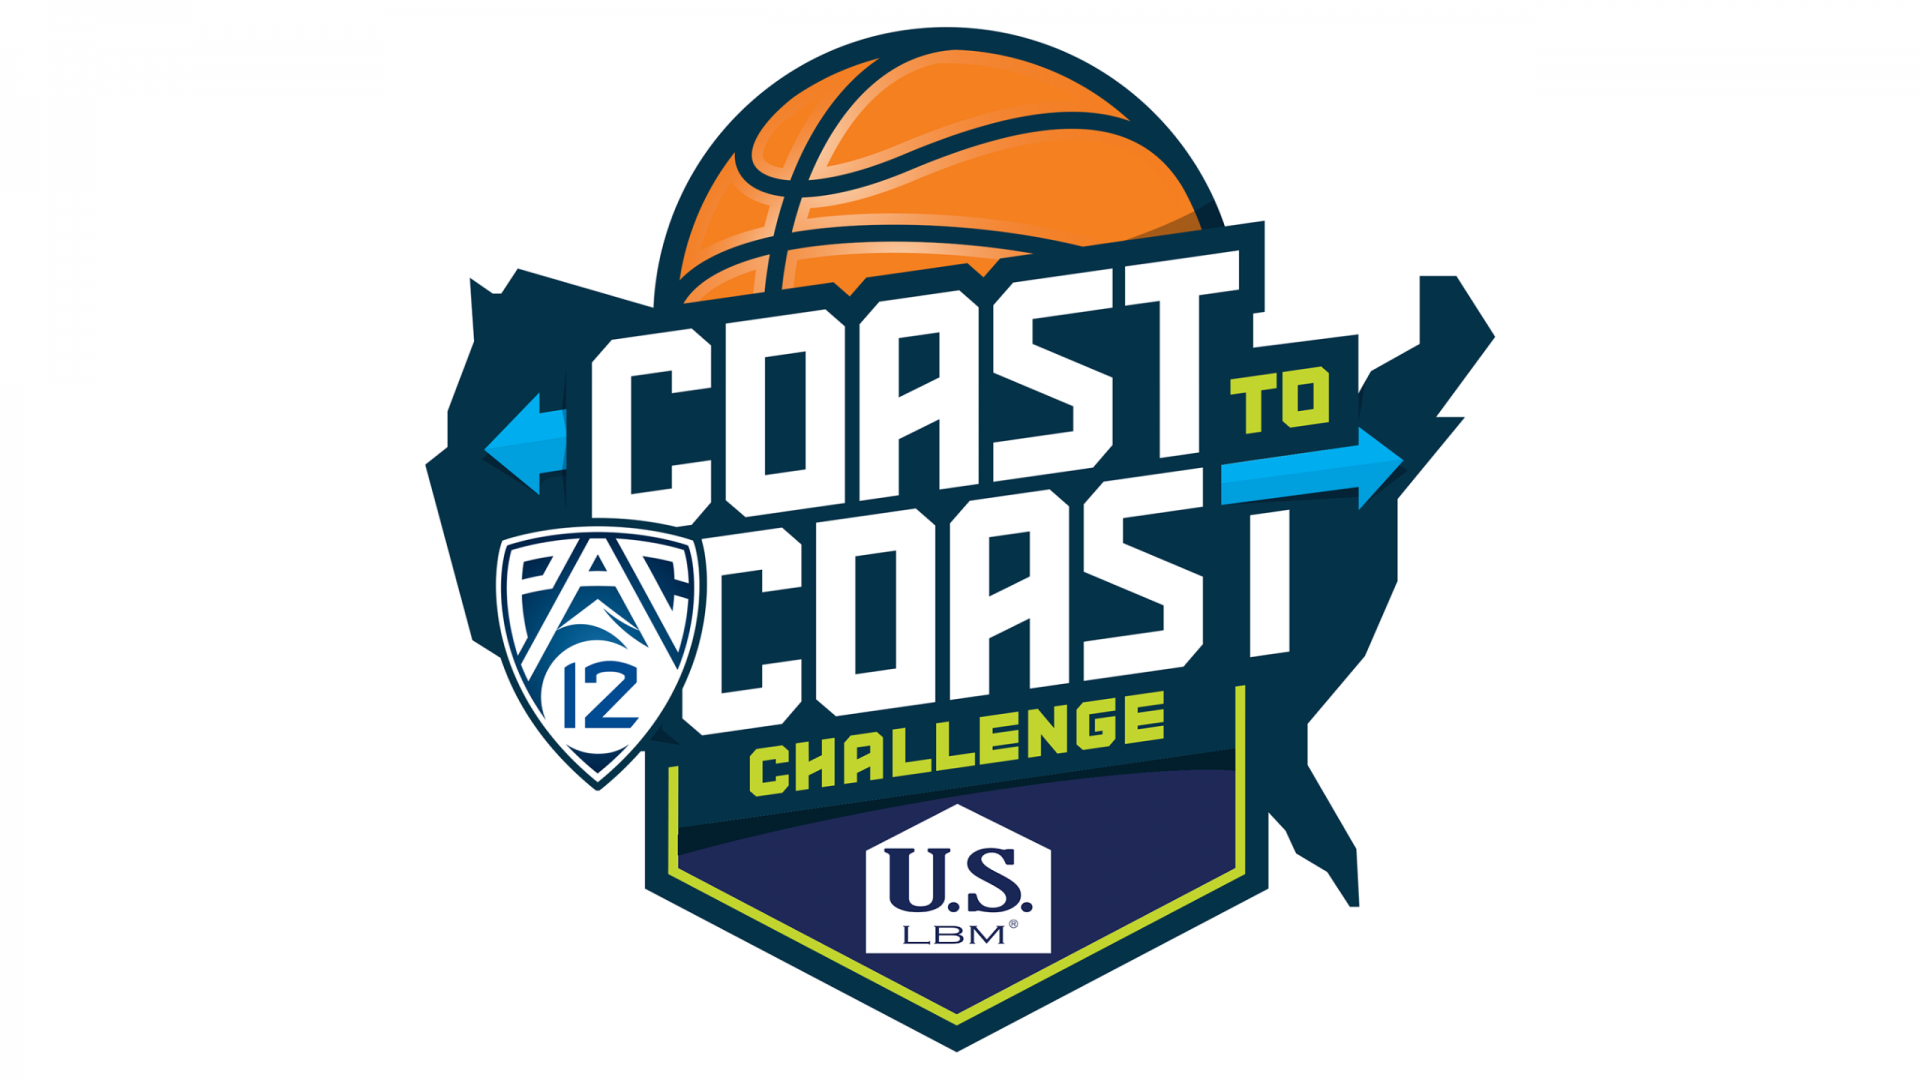 US LBM basketbal challenge logo